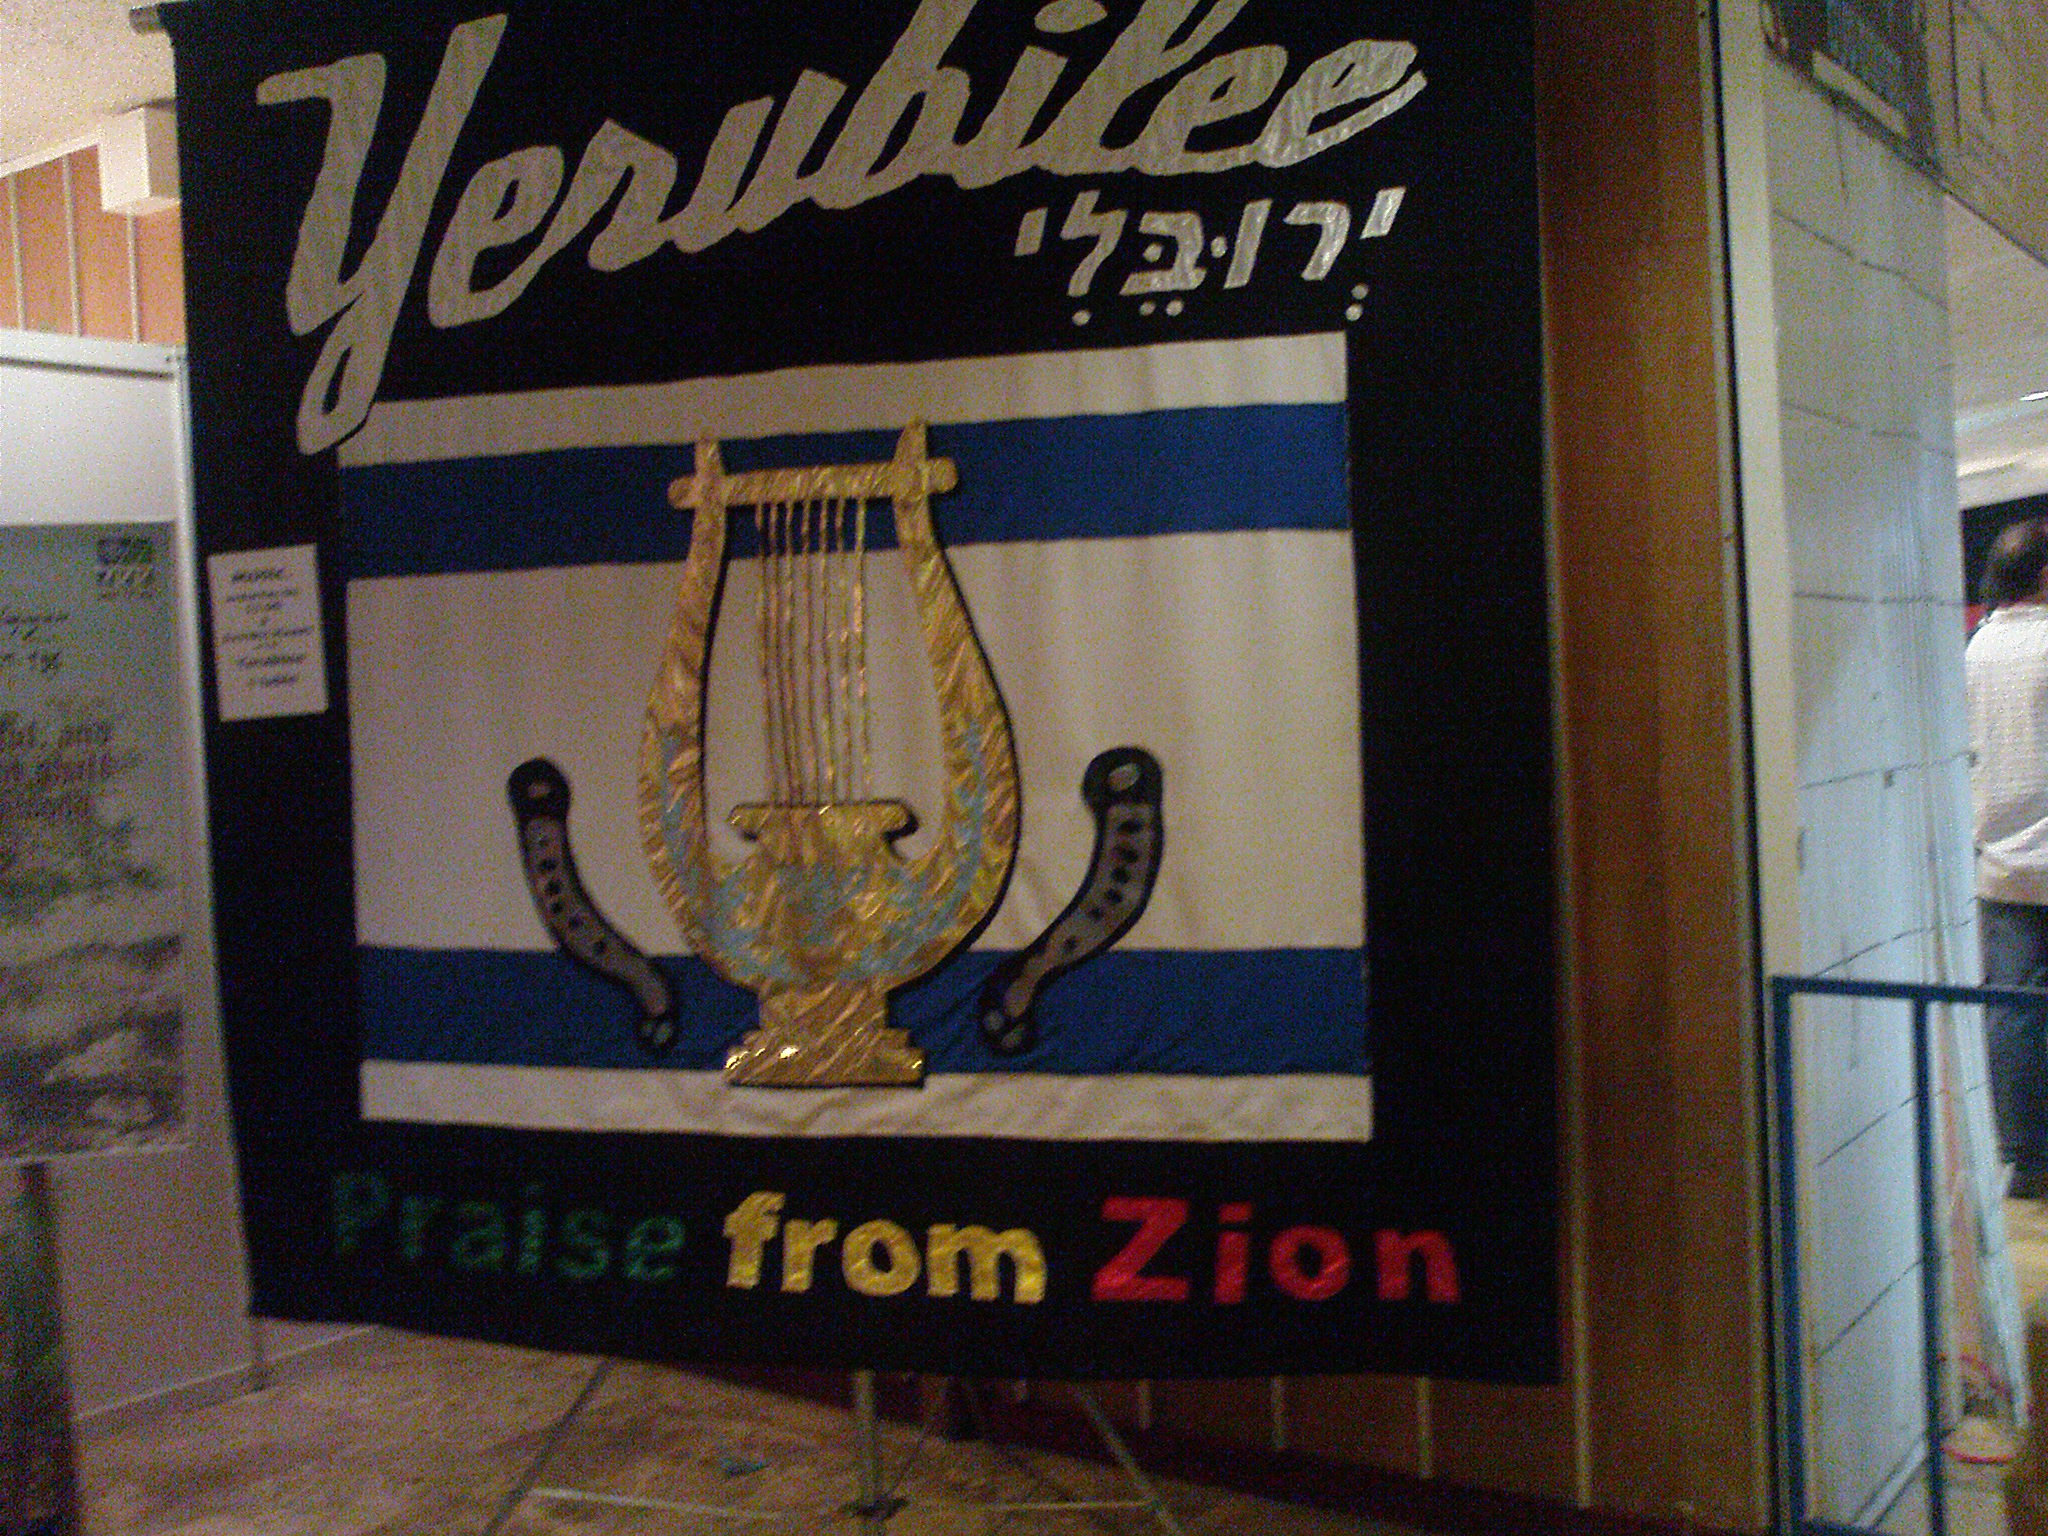 The Yerubilee banner